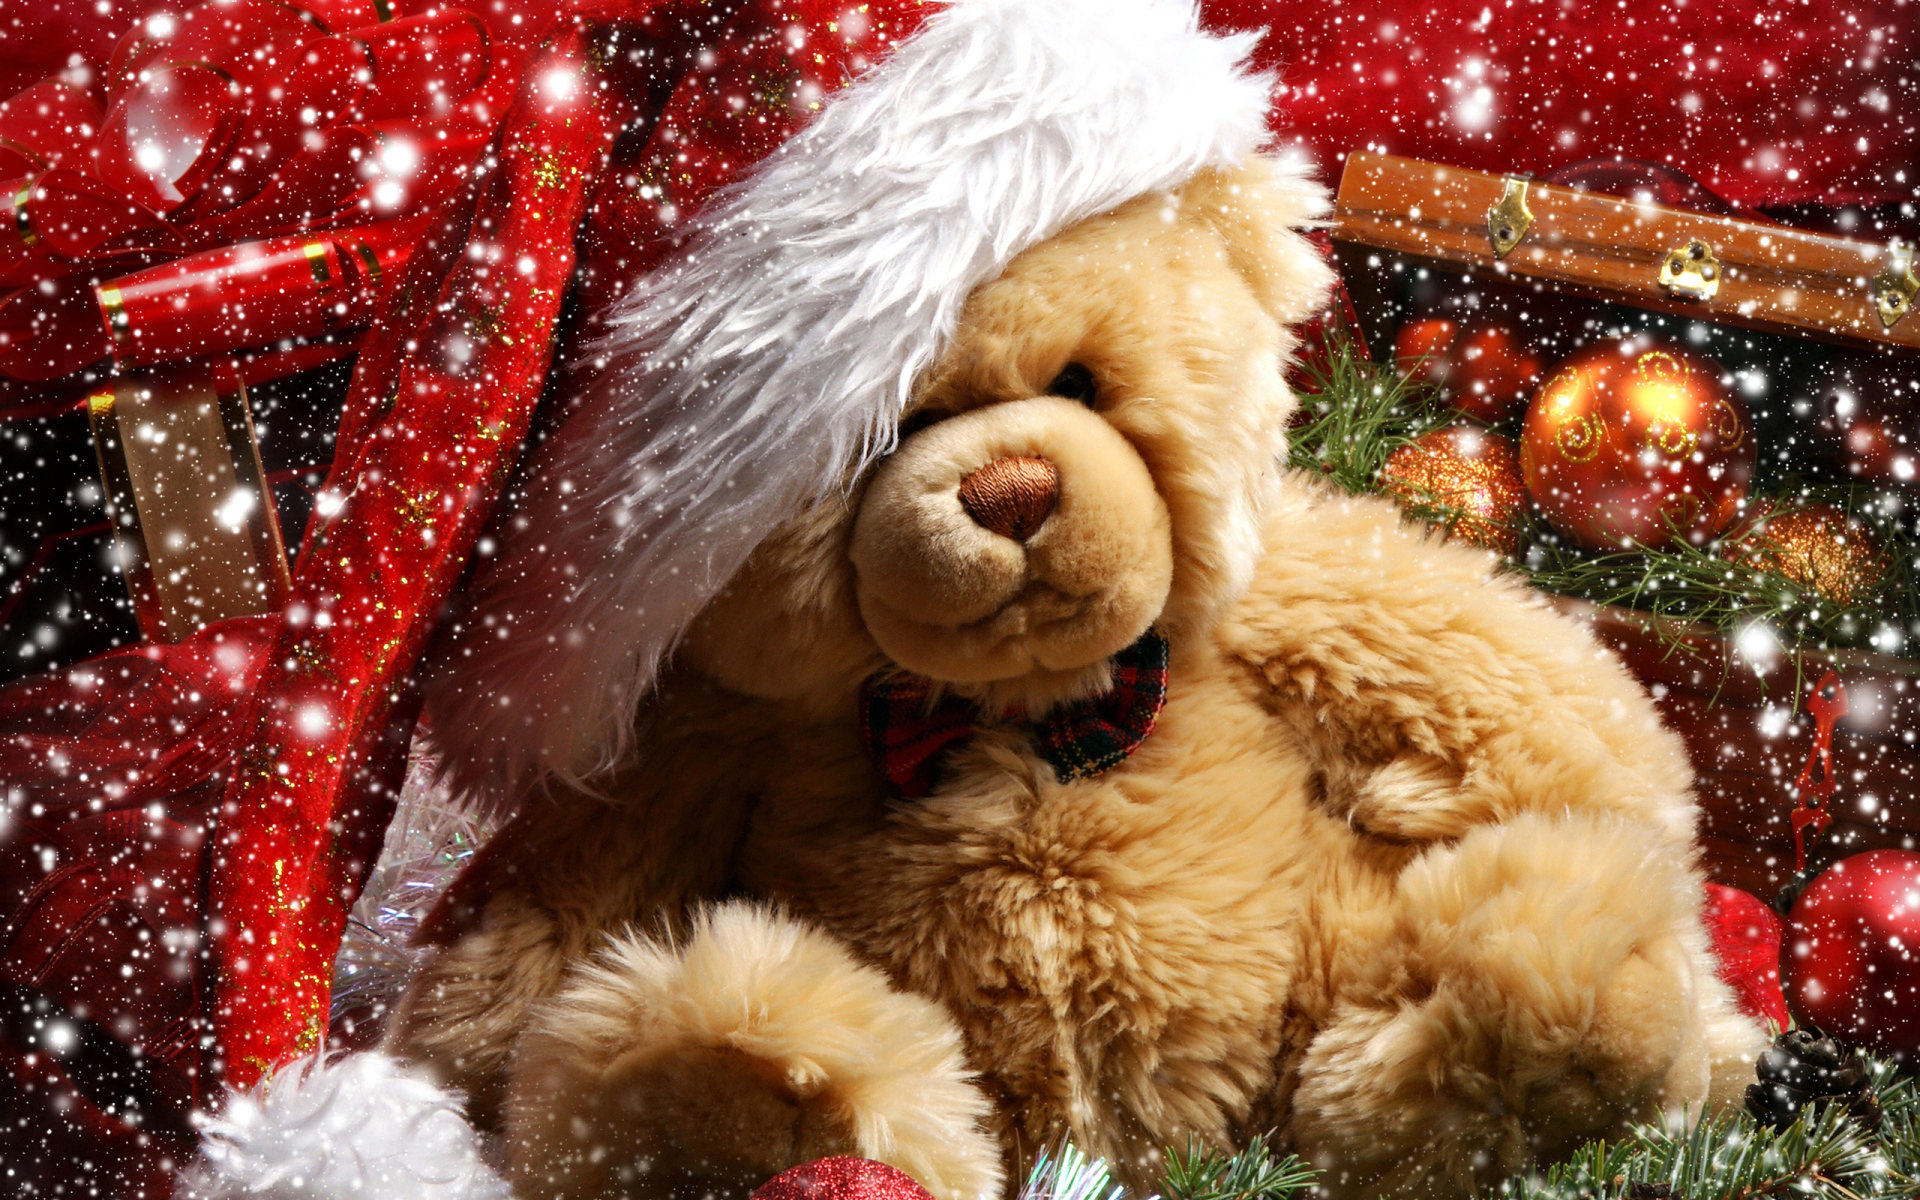 Teddy bear gift